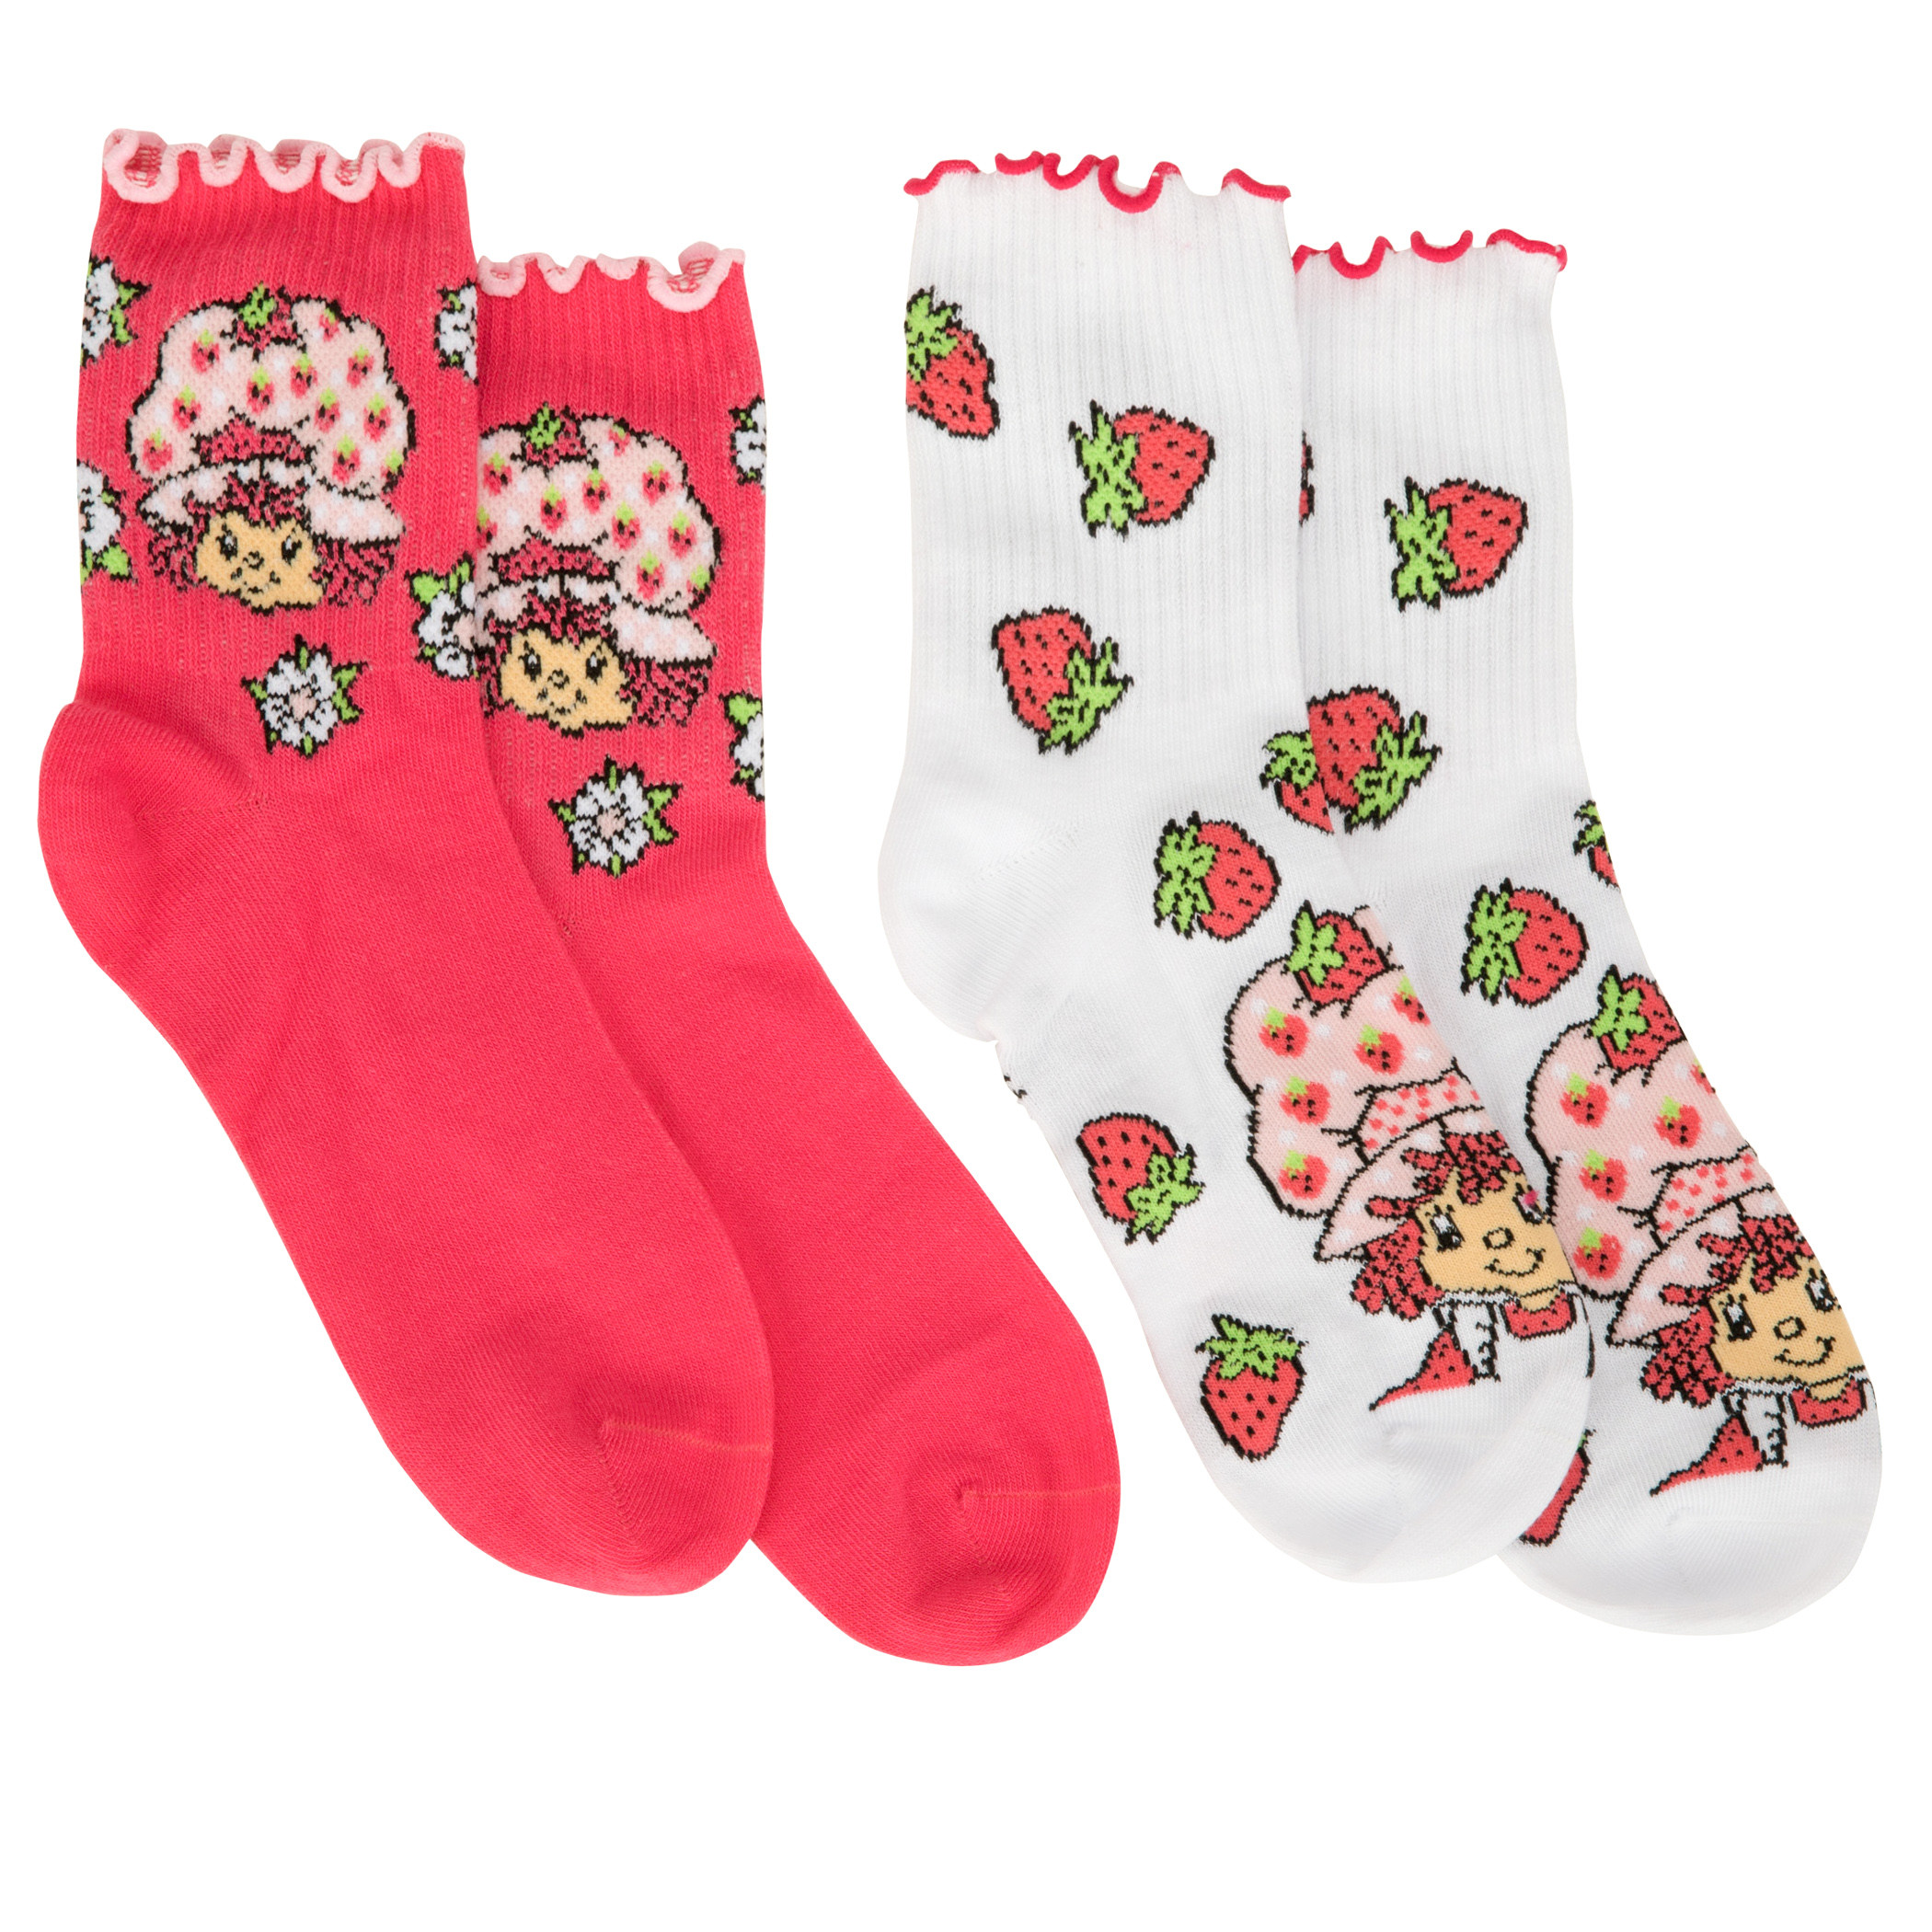 Strawberry Shortcake Sweet Treats Women's Ribbed Lettuce Socks 2-Pack